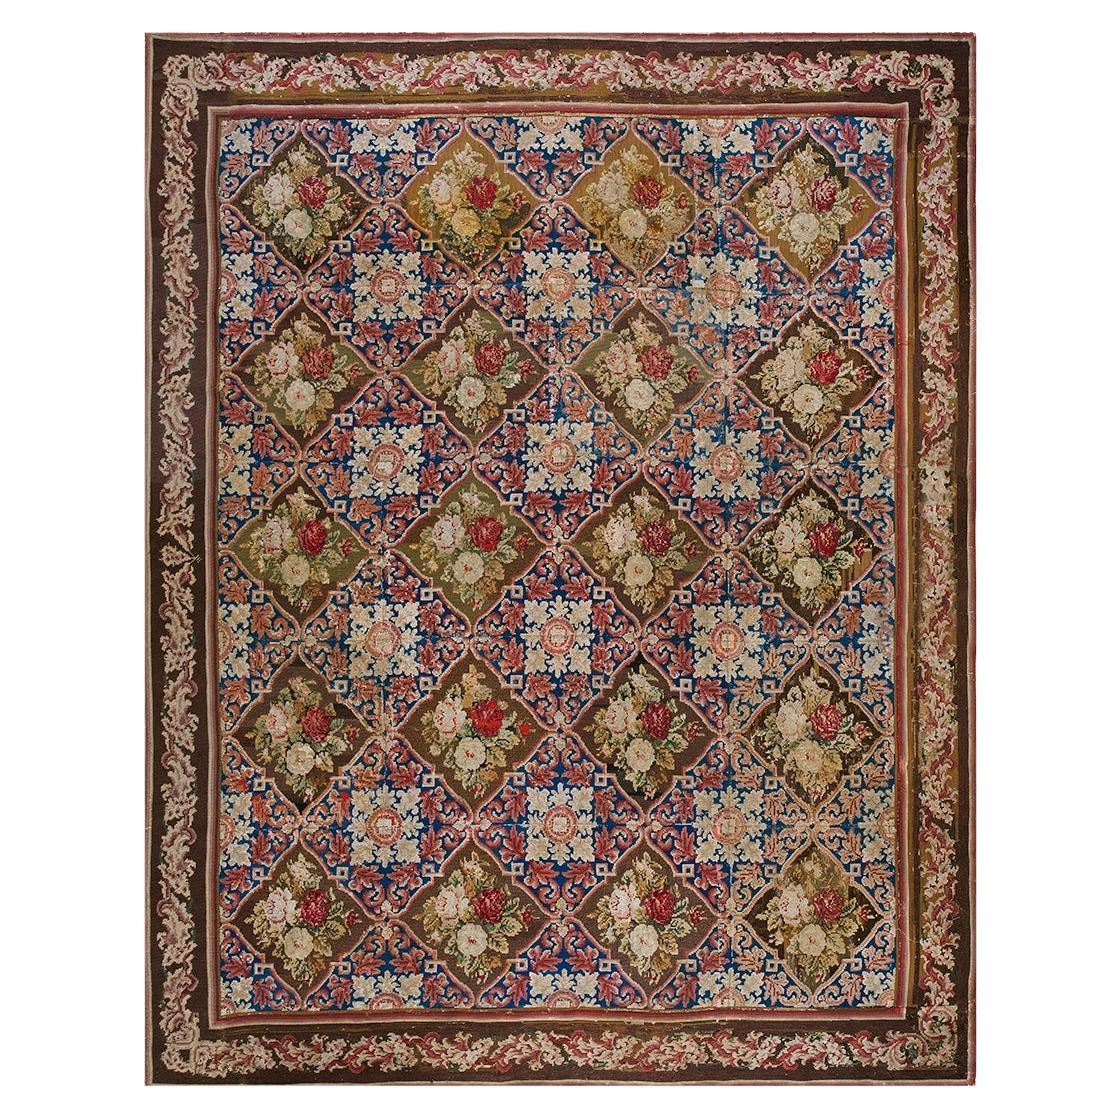 19th Century English Needlepoint Carpet ( 7'6" x 9'3" - 230 x 282 ) For Sale